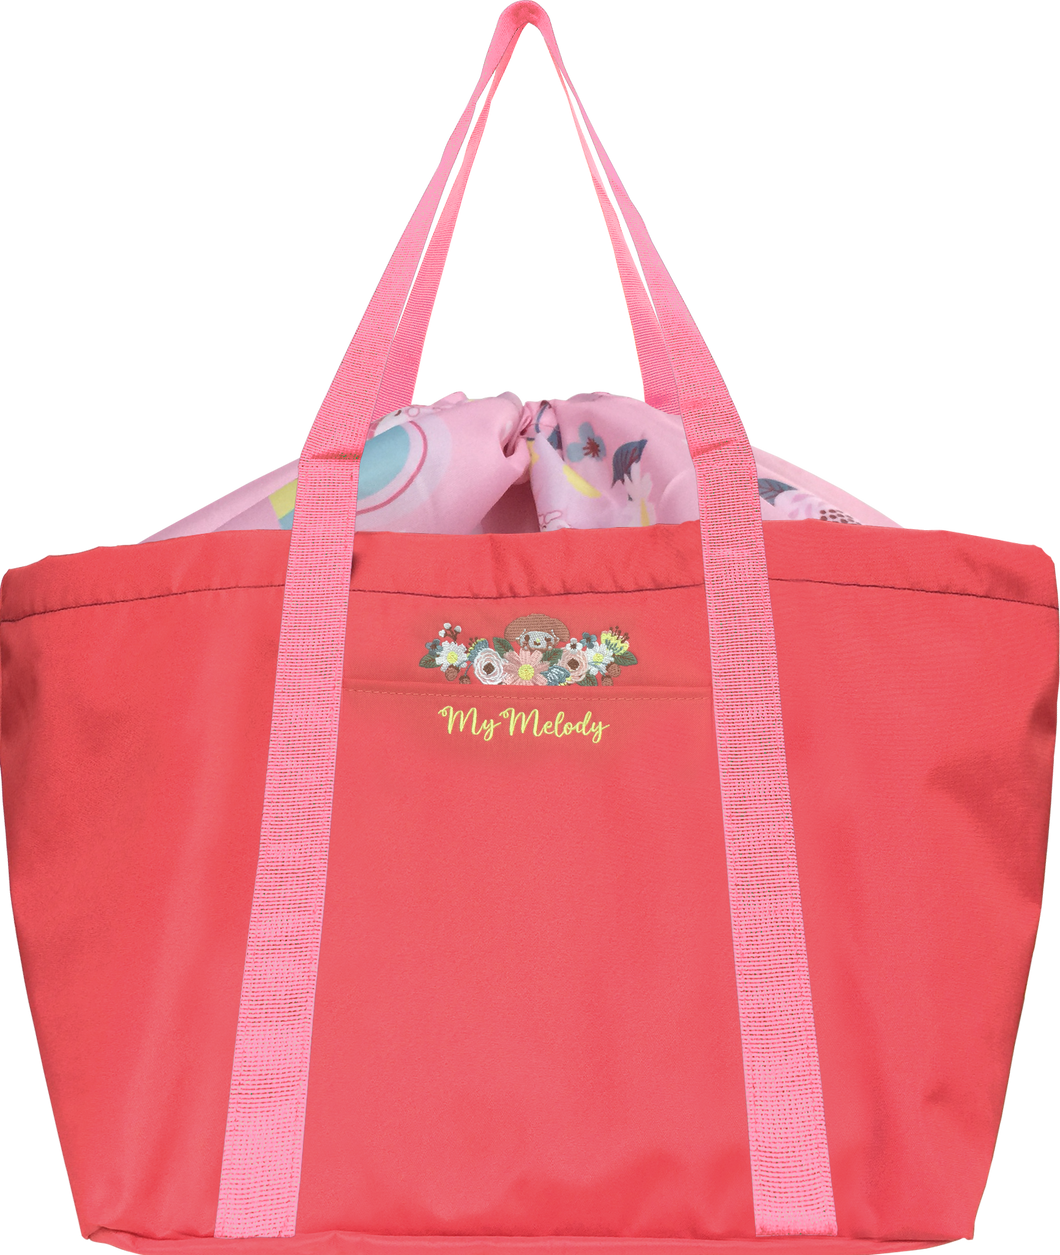 My Melody摺疊式購物袋 Foldable shopping bag